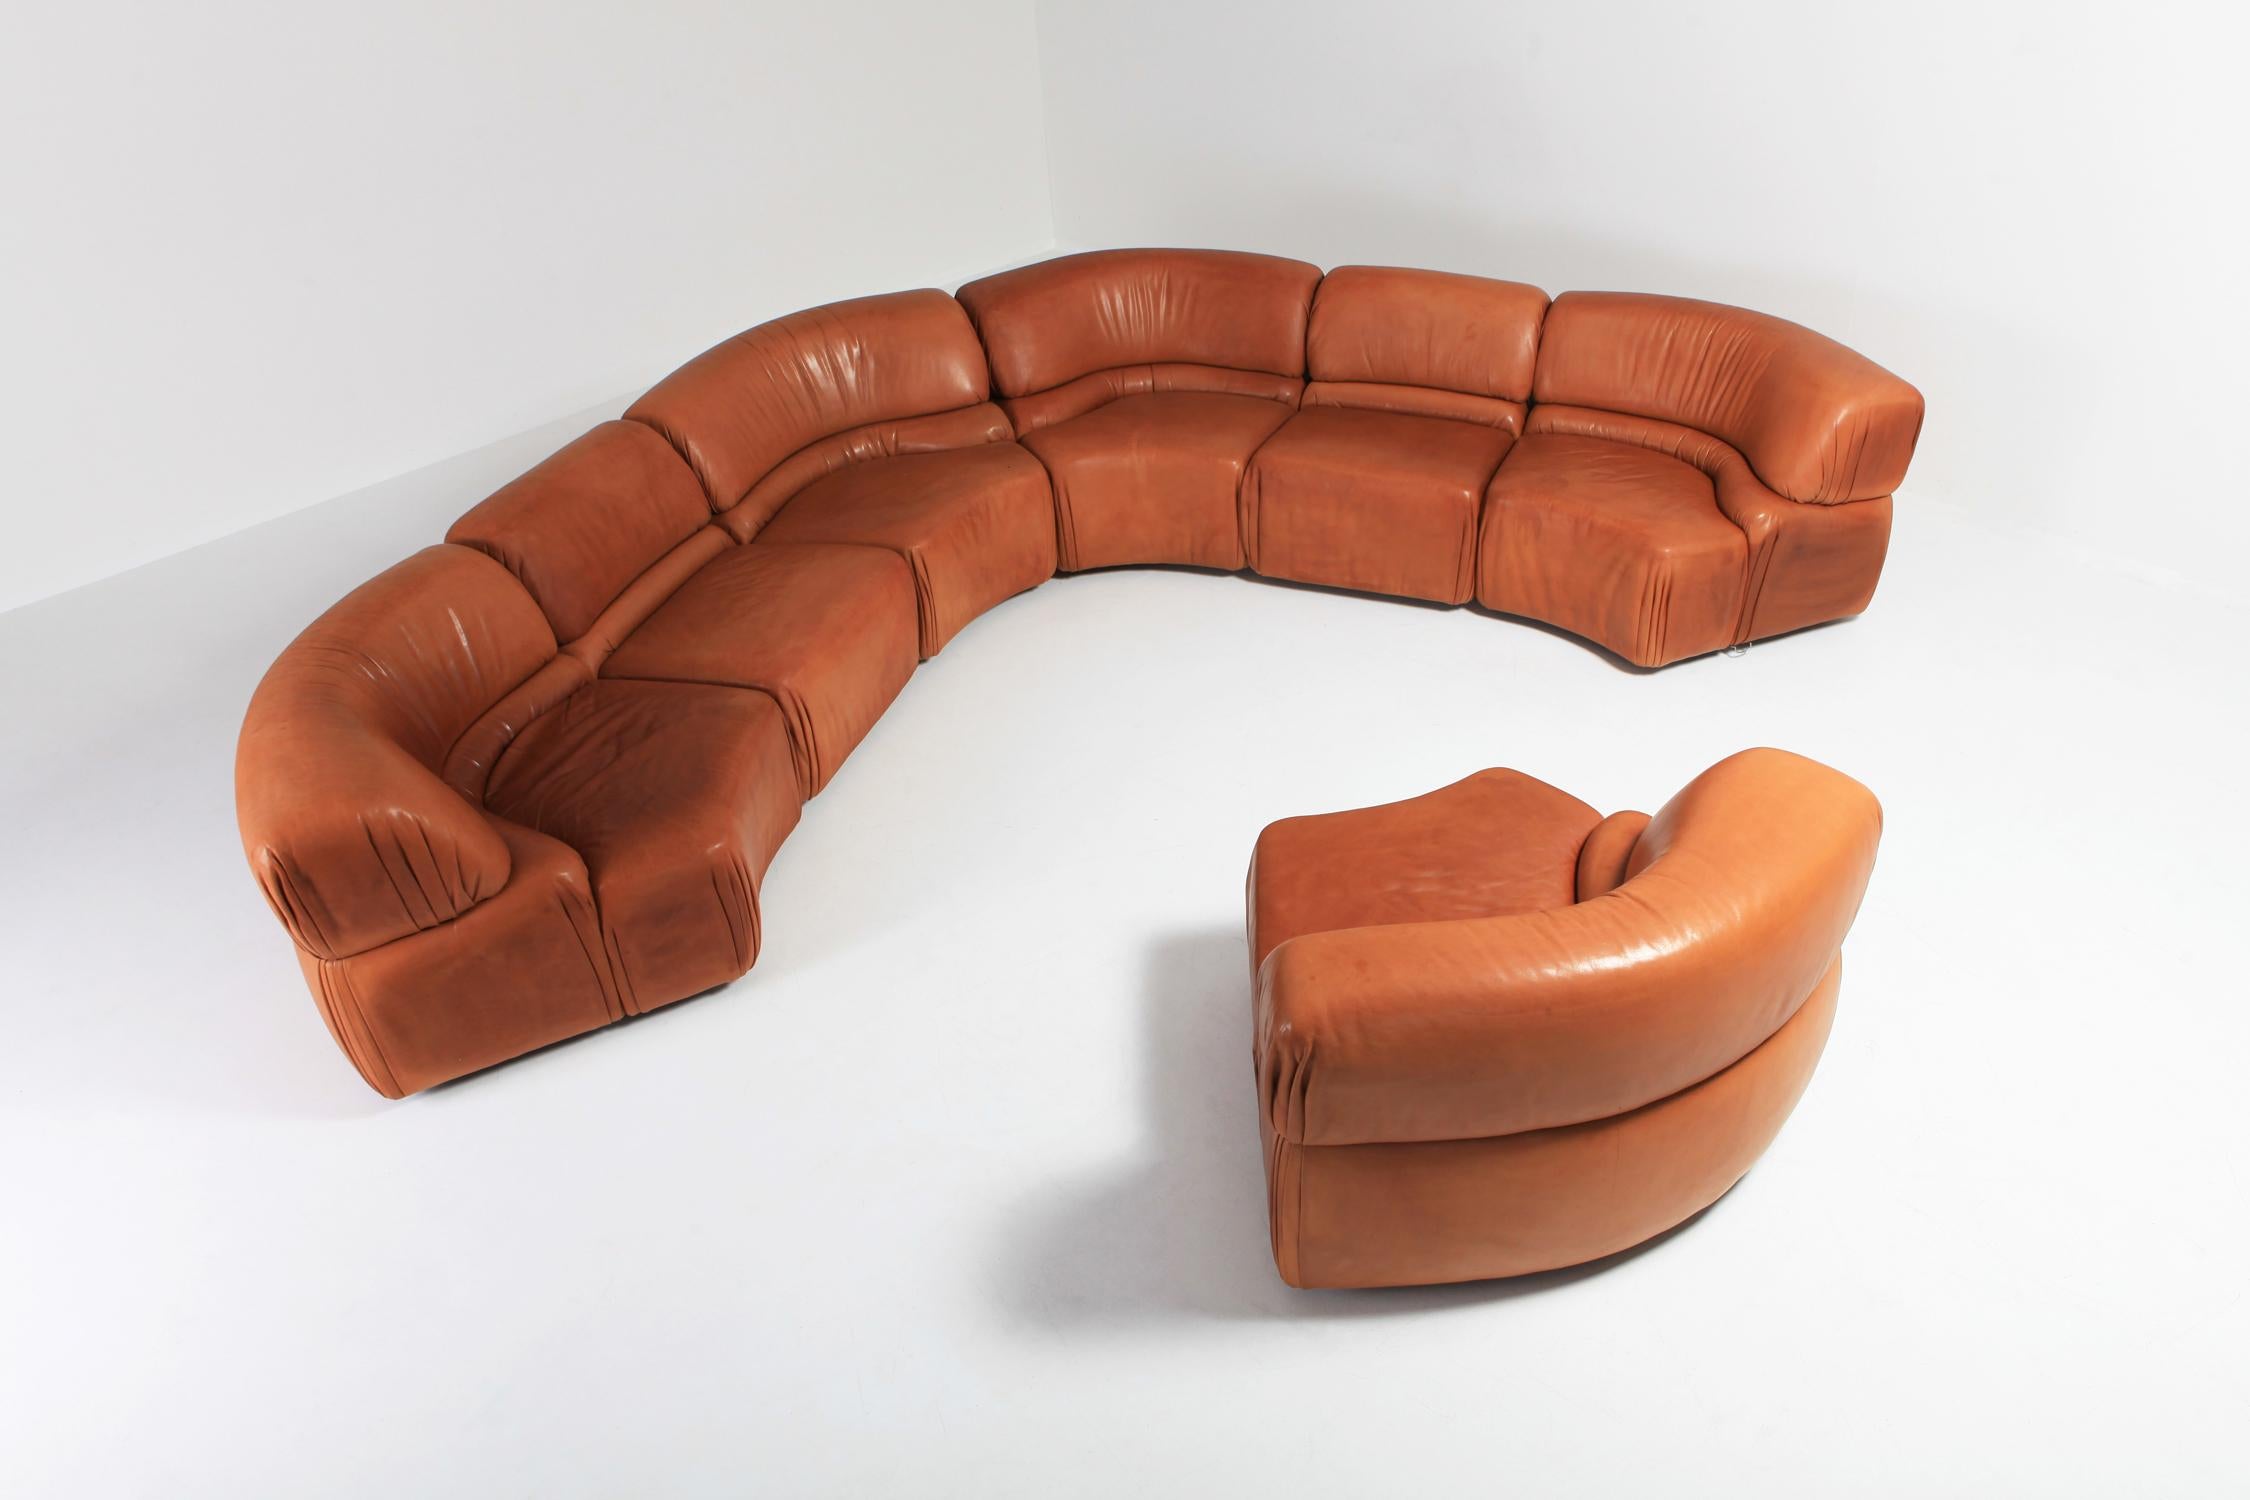 Swiss Sectional Cognac Leather Sofa 'Cosmos' by De Sede, Switzerland